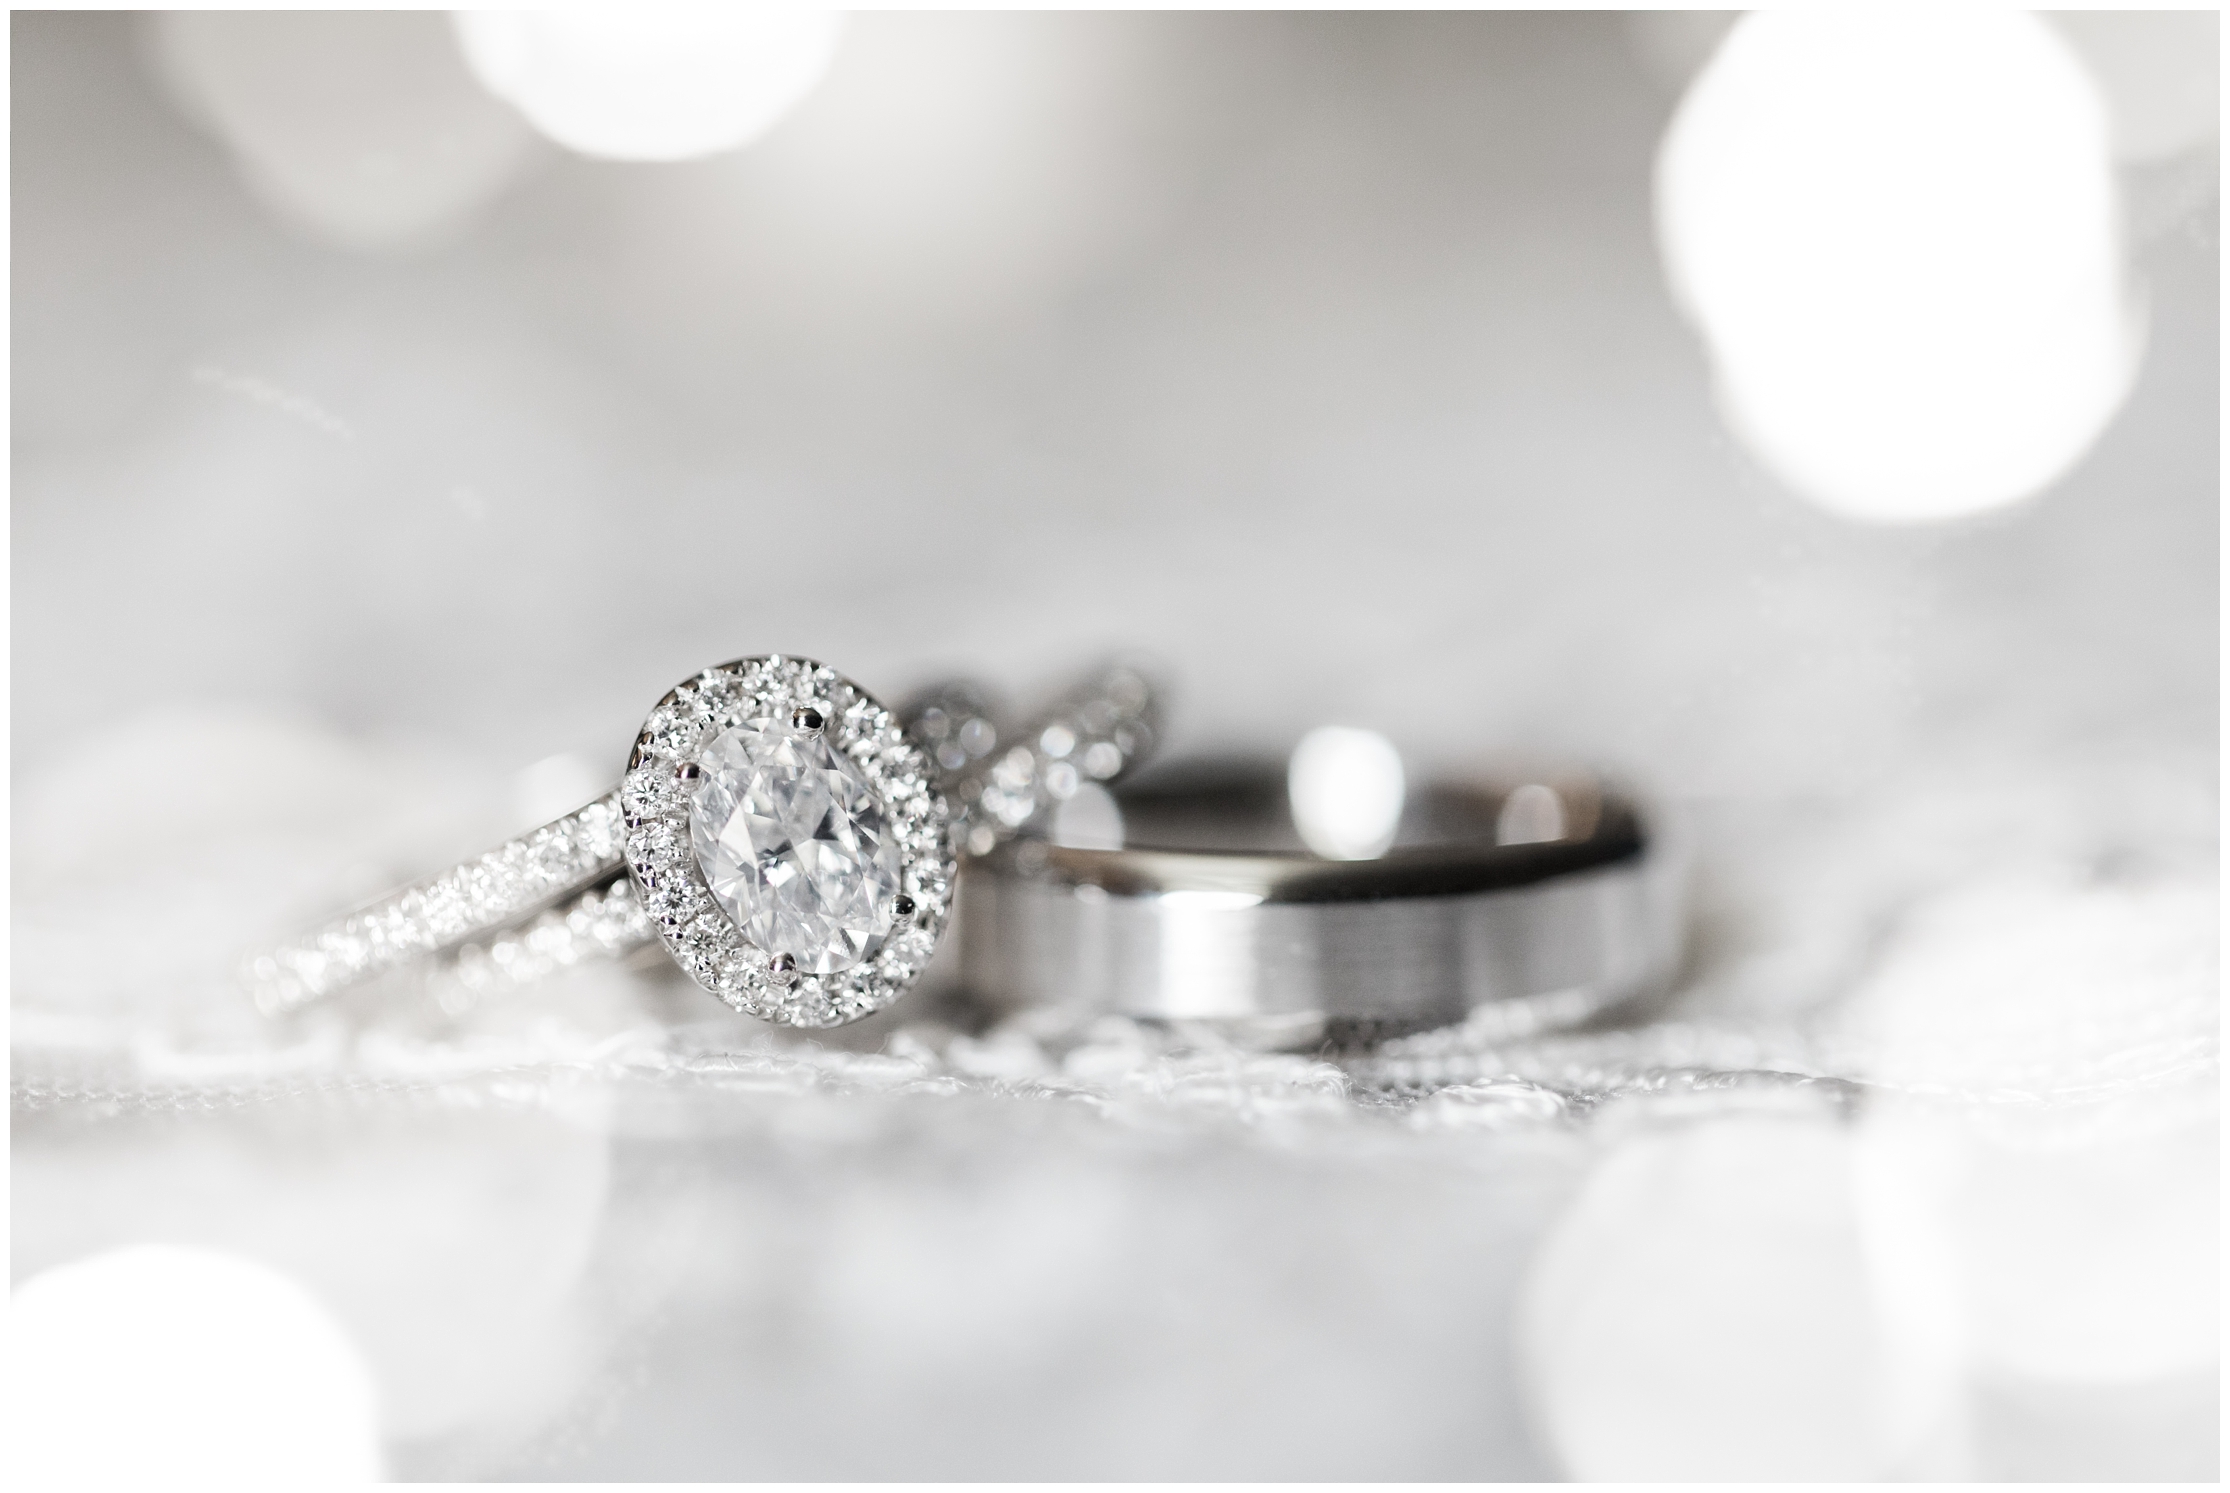 oval diamond engagement ring, wedding bands, Oval halo engagement ring, Wedding bands, wedding day details, pittsburgh wedding details, pittsburgh wedding photographer, bokeh wedding bands, 